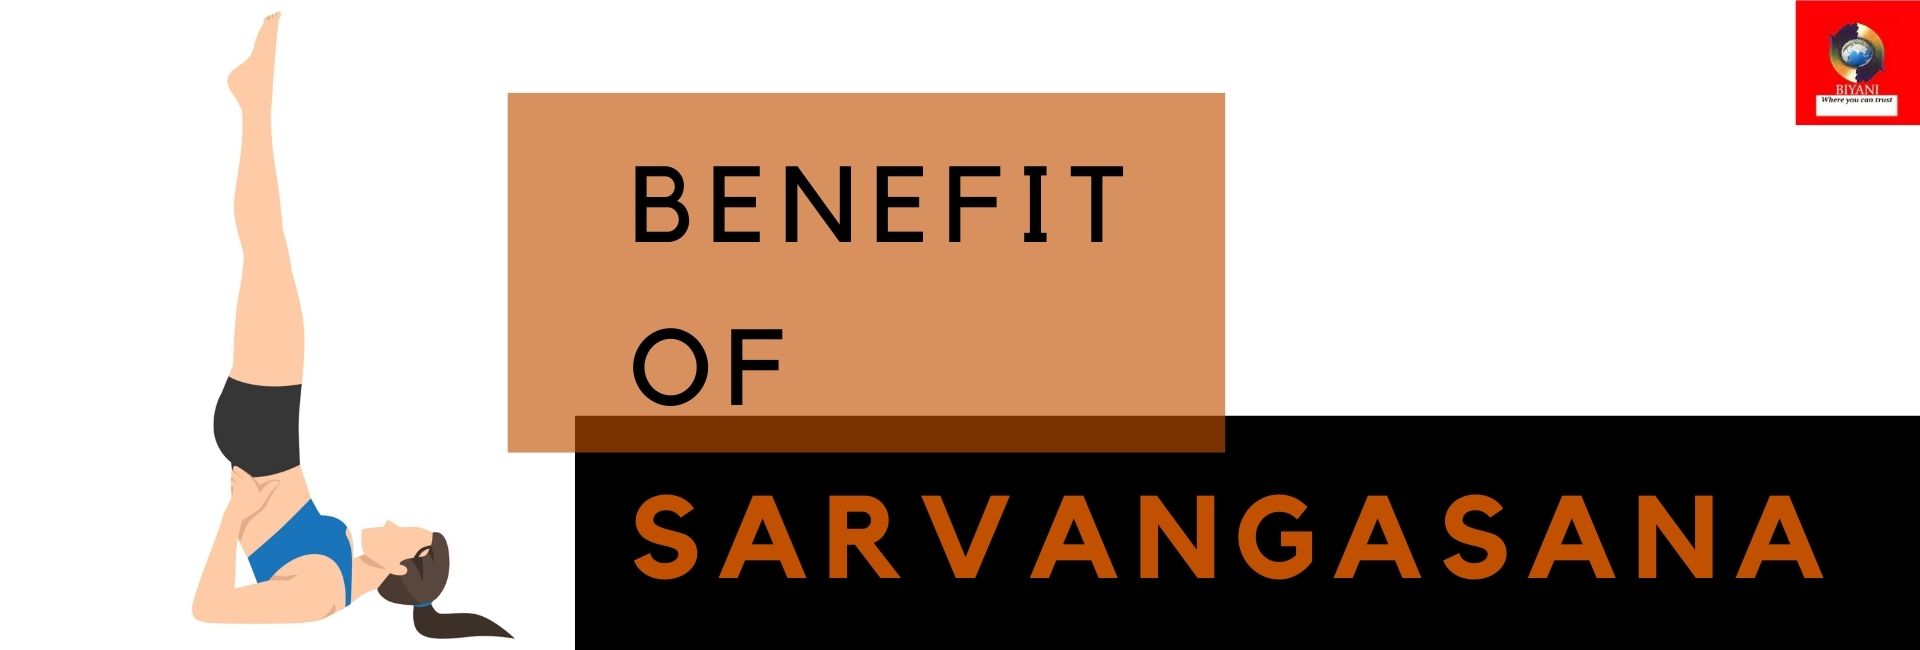 benefit of sarvangasana